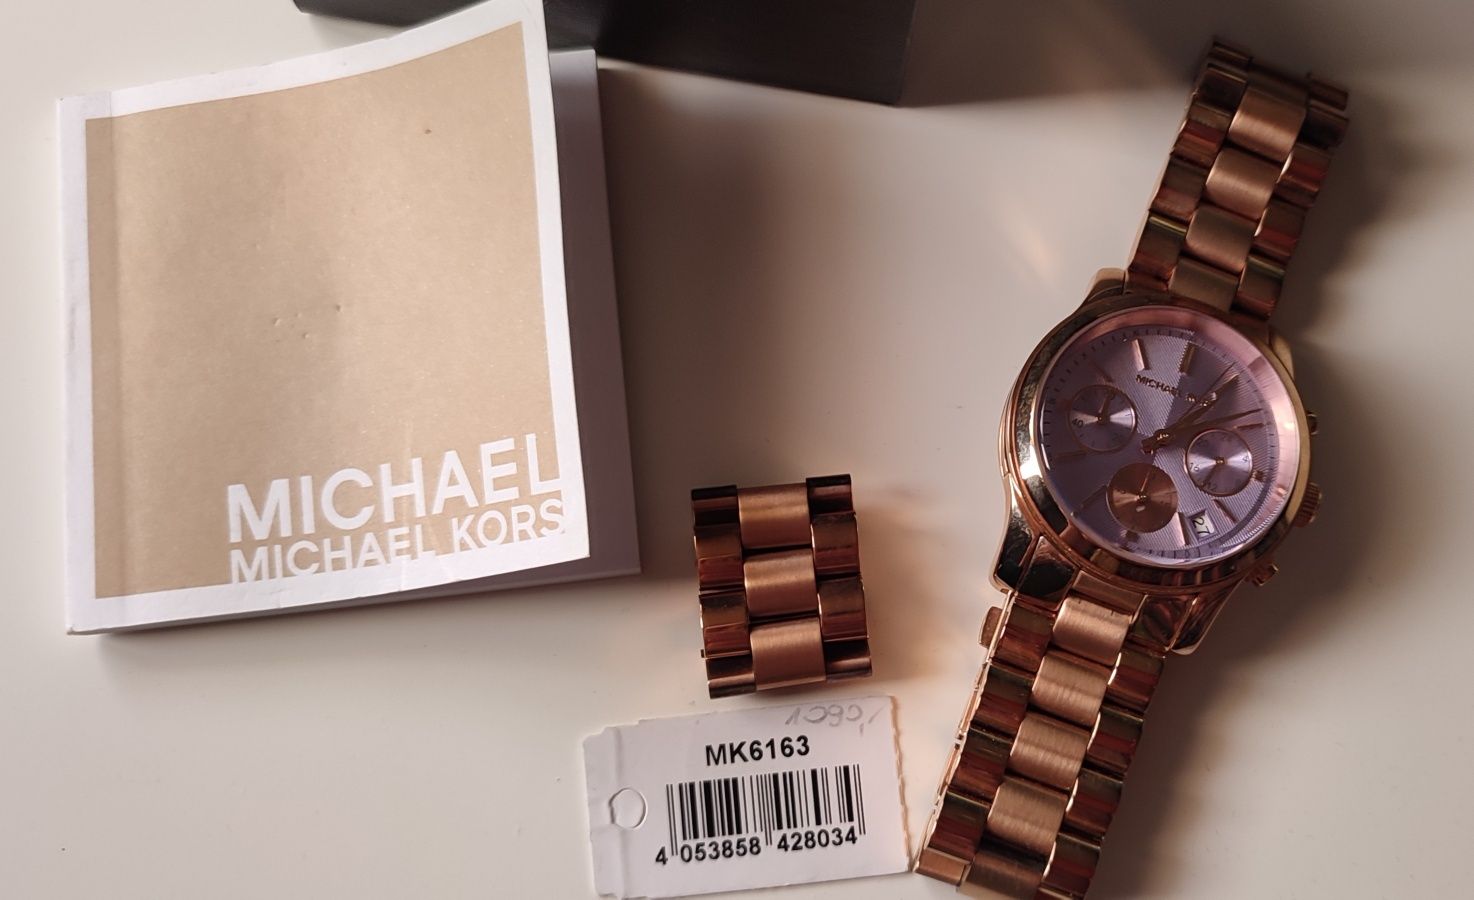 Oryginalny zegarek Michael Kors MK6163